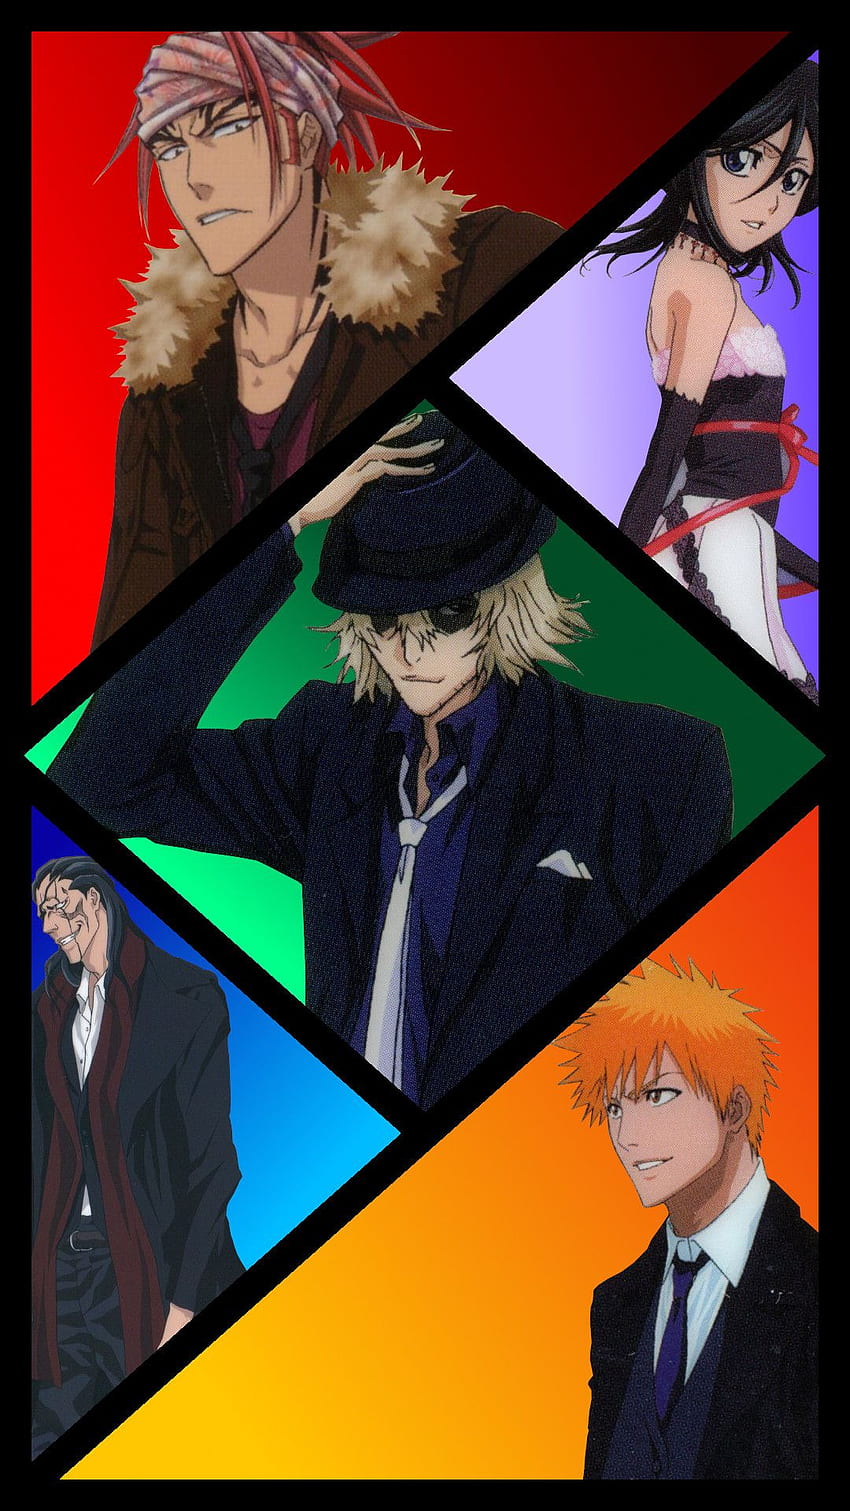 Wallpaper ID 386867  Anime Bleach Phone Wallpaper Minimalist Bankai  Ichigo Kurosaki 1080x1920 free download